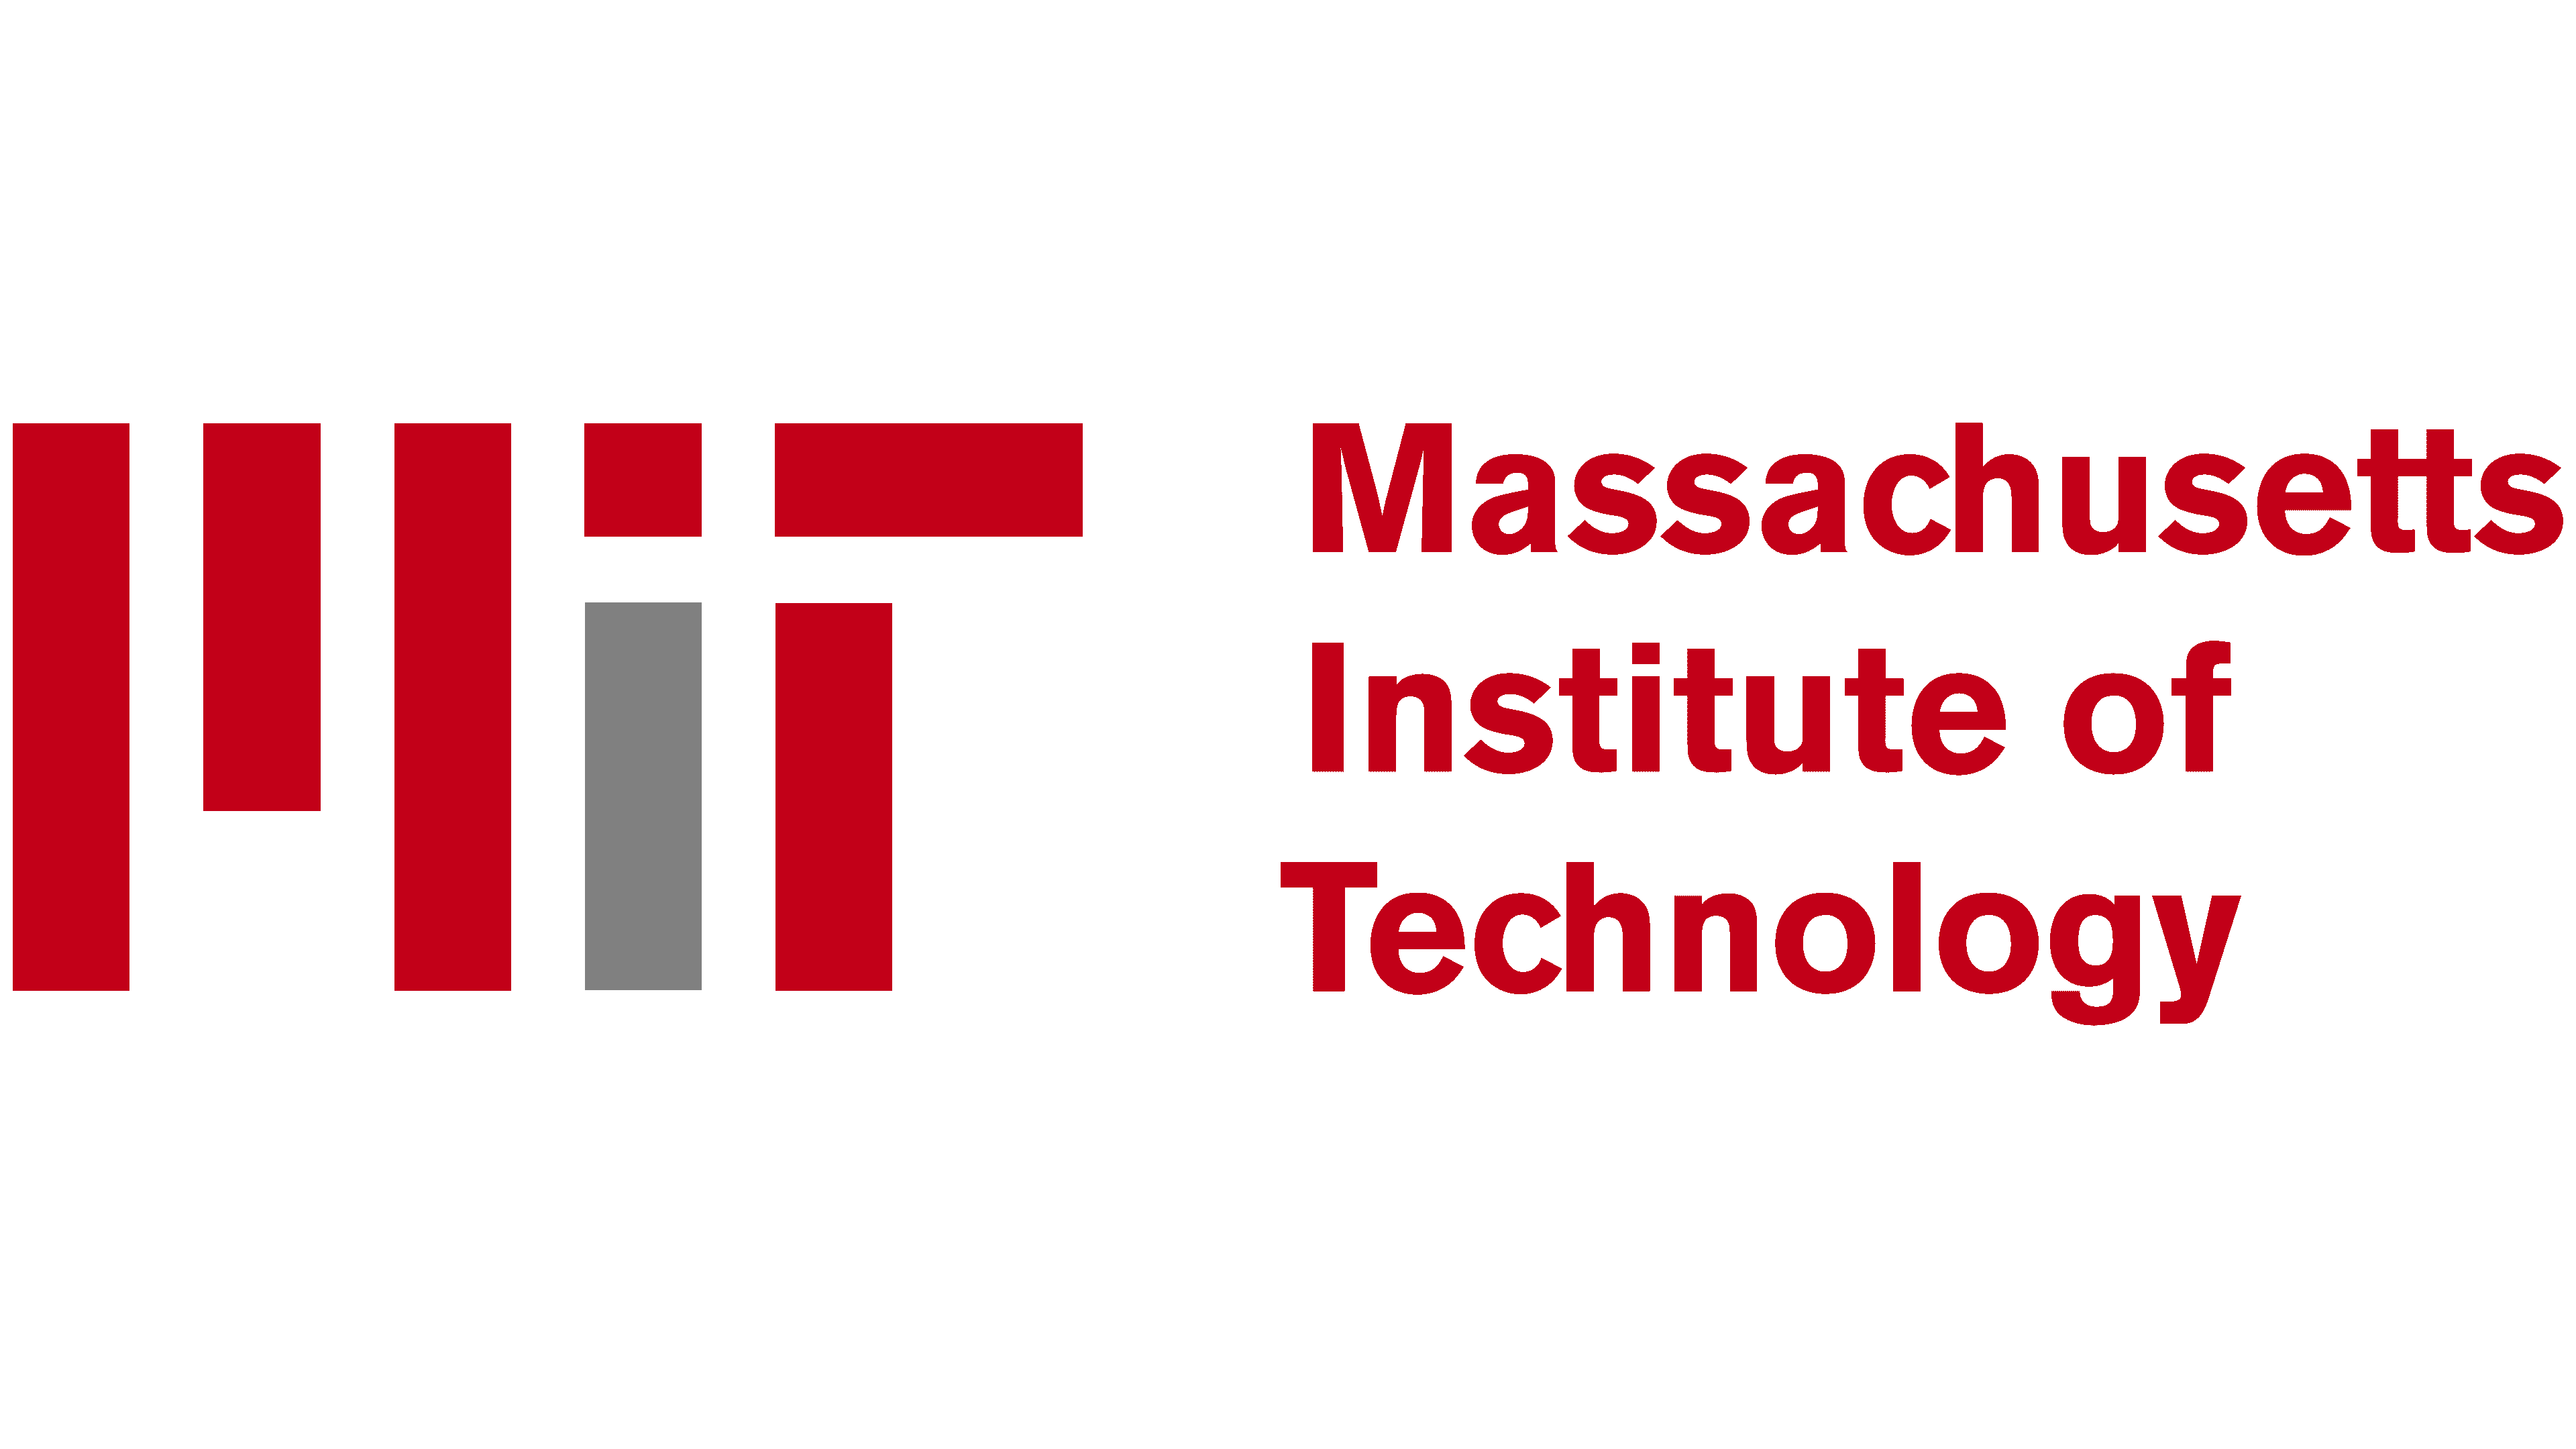 mit-massachusetts-institute-of-technology-logo.png